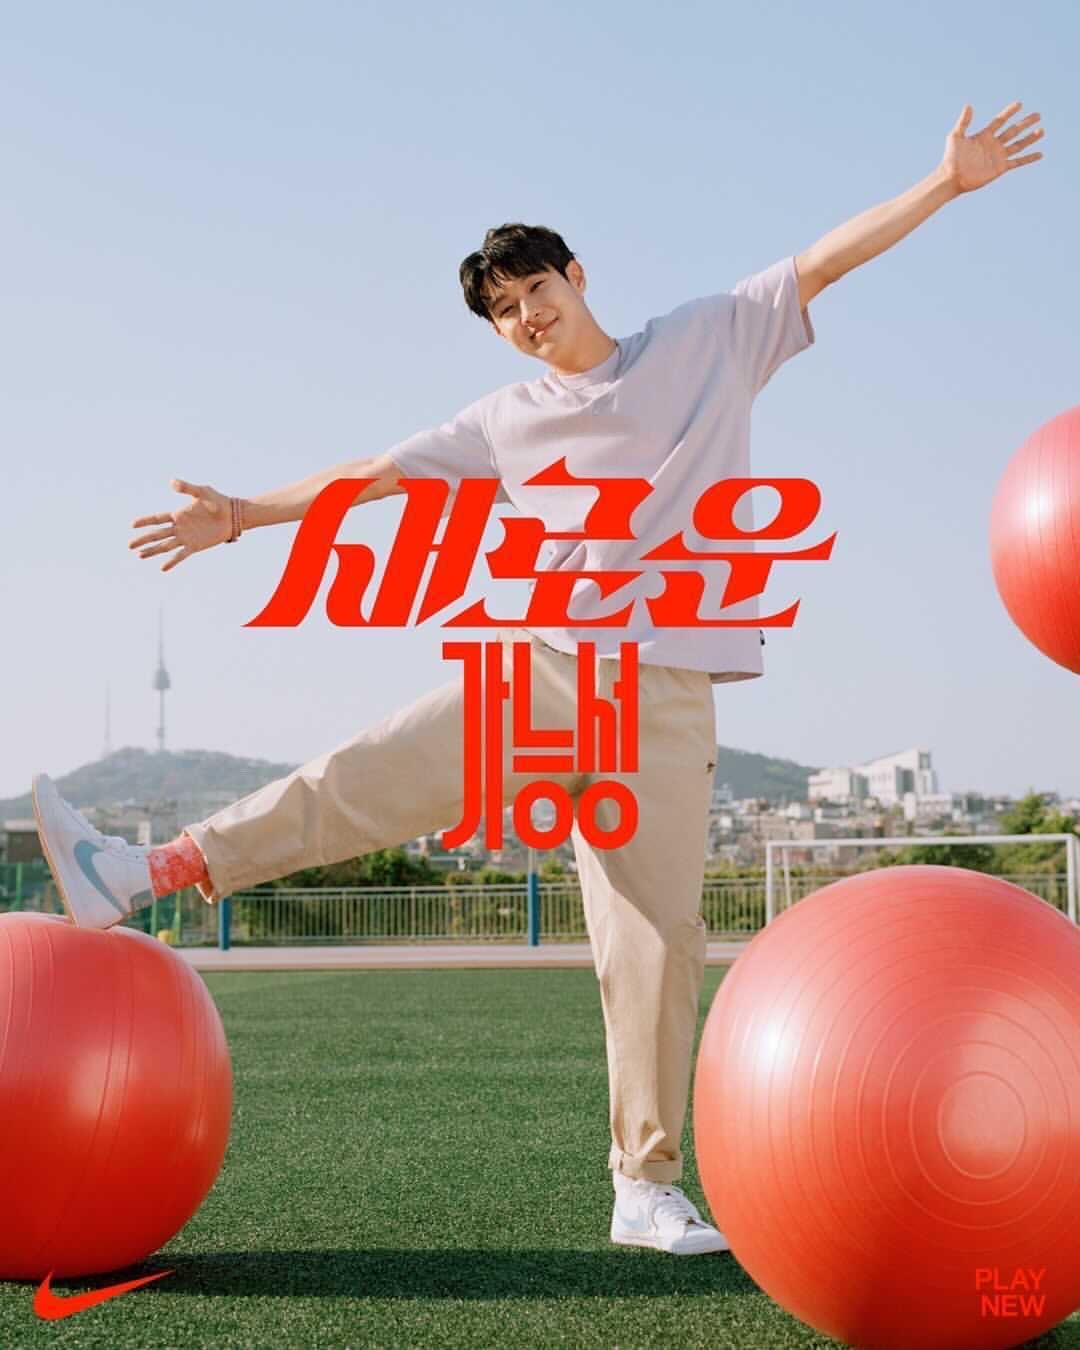 Nike Play New Campaign 2021 - Choi Woo-Shik